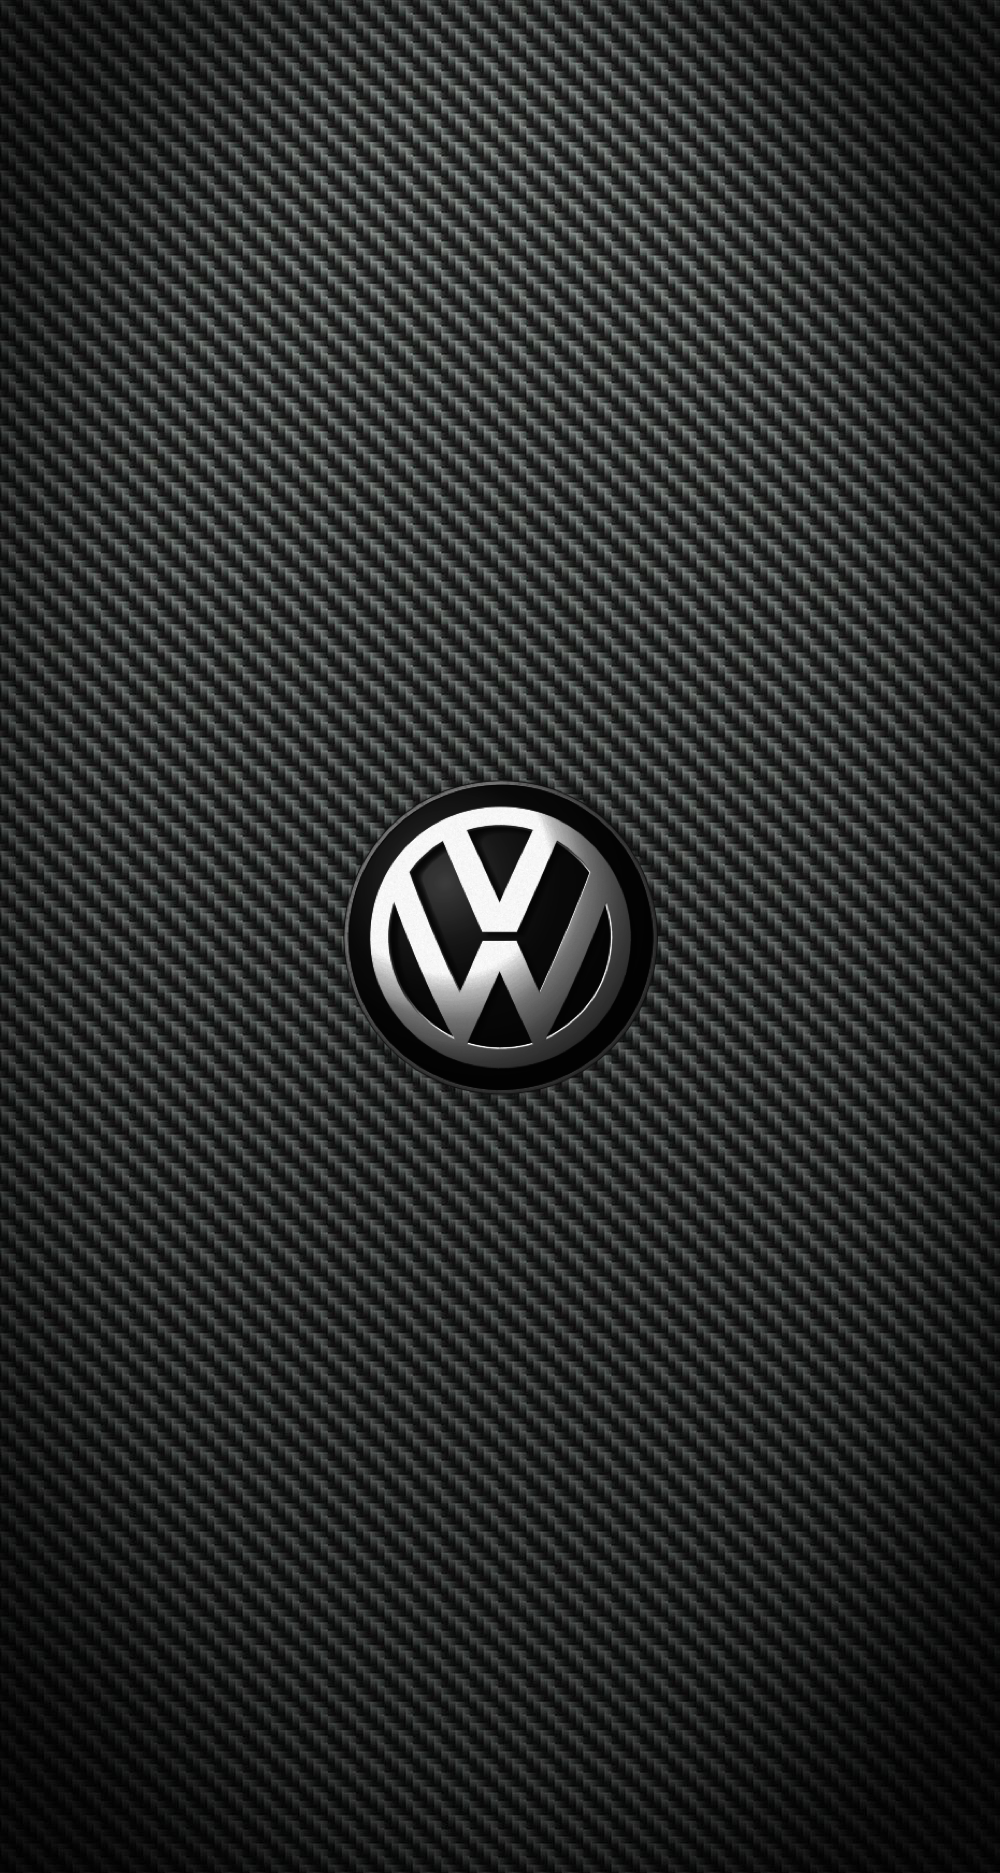 Volkswagen Wallpaper Energy technology. Volkswagen golf, Volkswagen, Volkswagen golf mk1